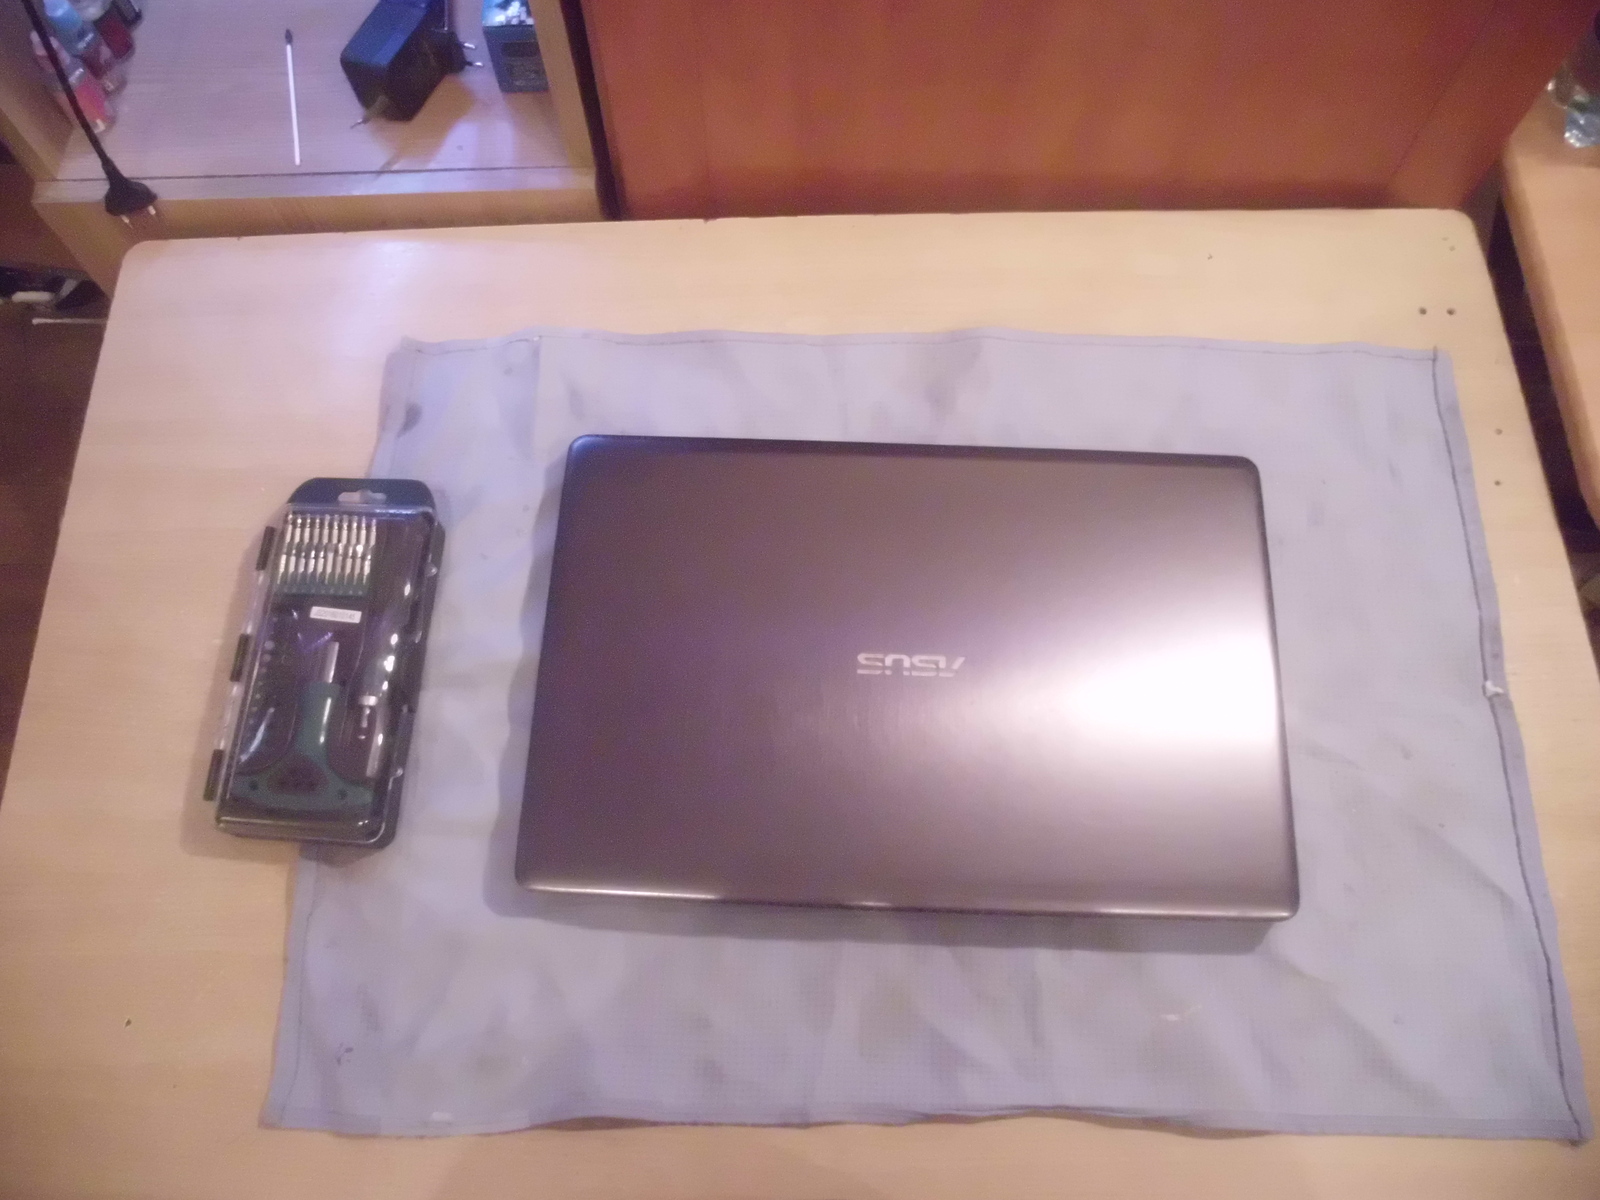 Ноутбук Asus N750j Цена